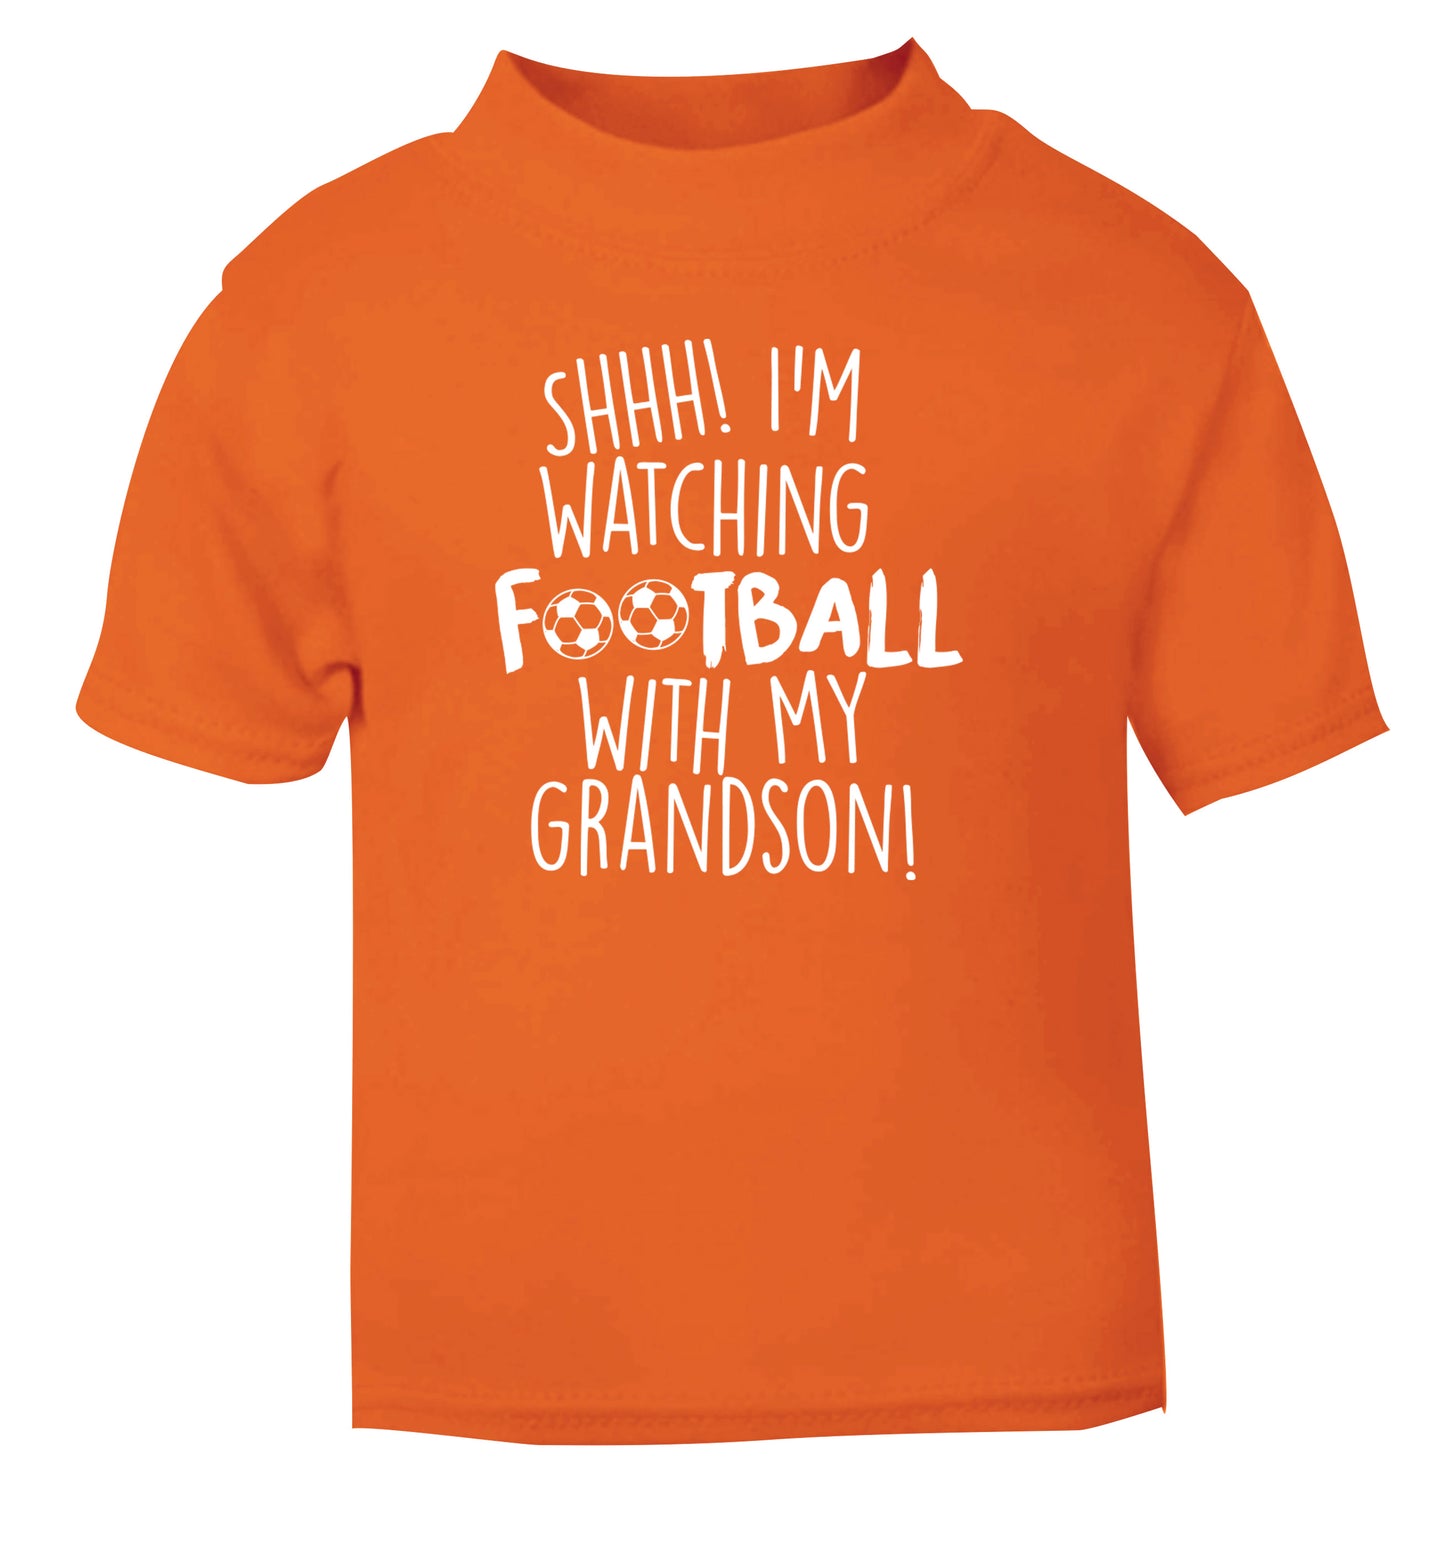 Shhh I'm watching football with my grandson orange Baby Toddler Tshirt 2 Years